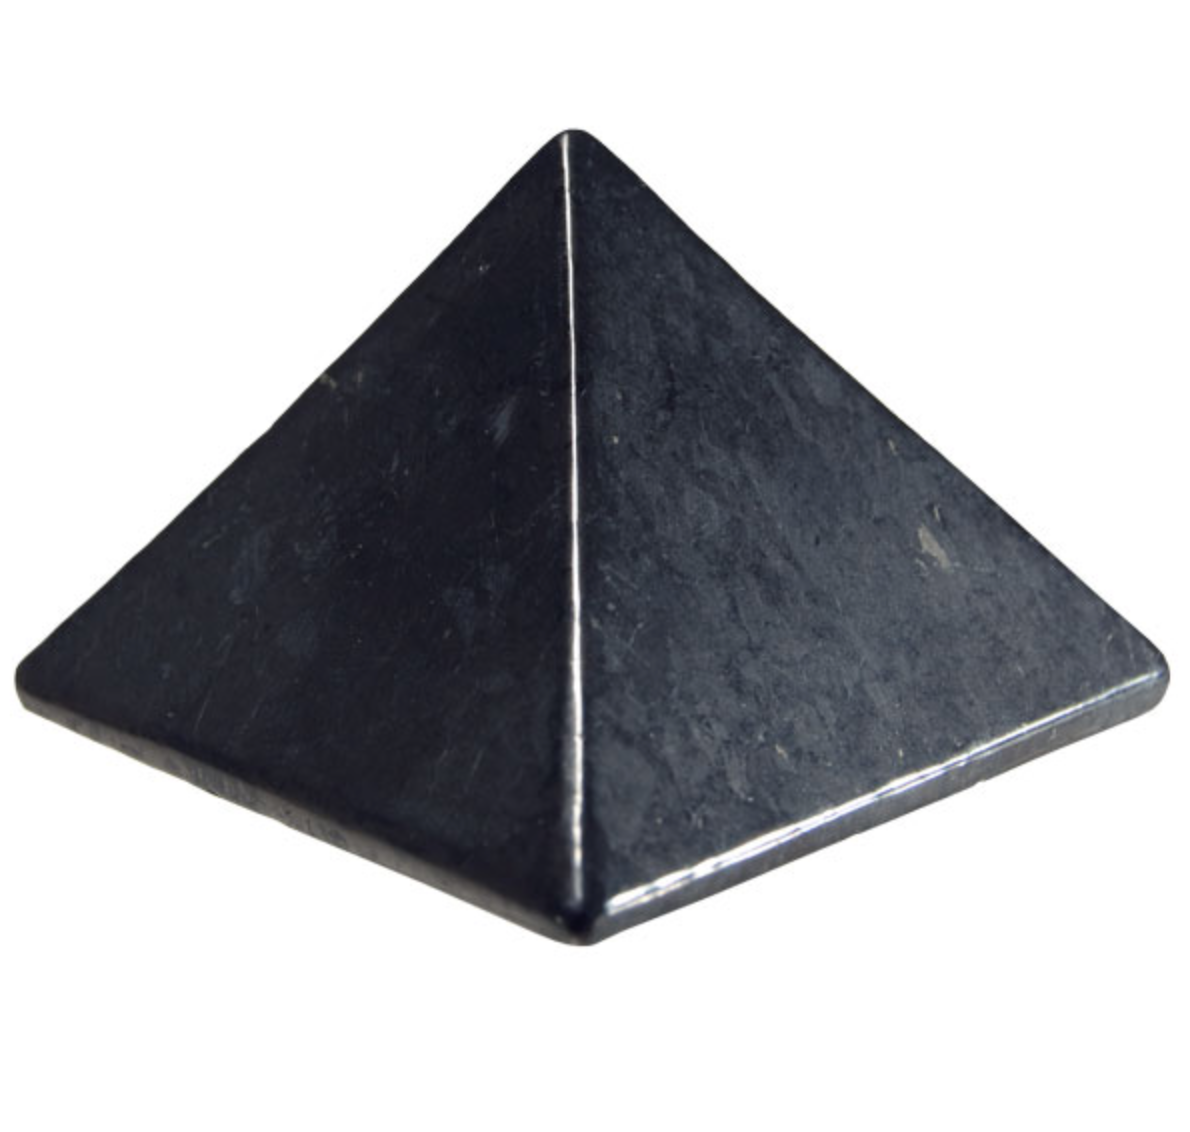 Mini Pyramid